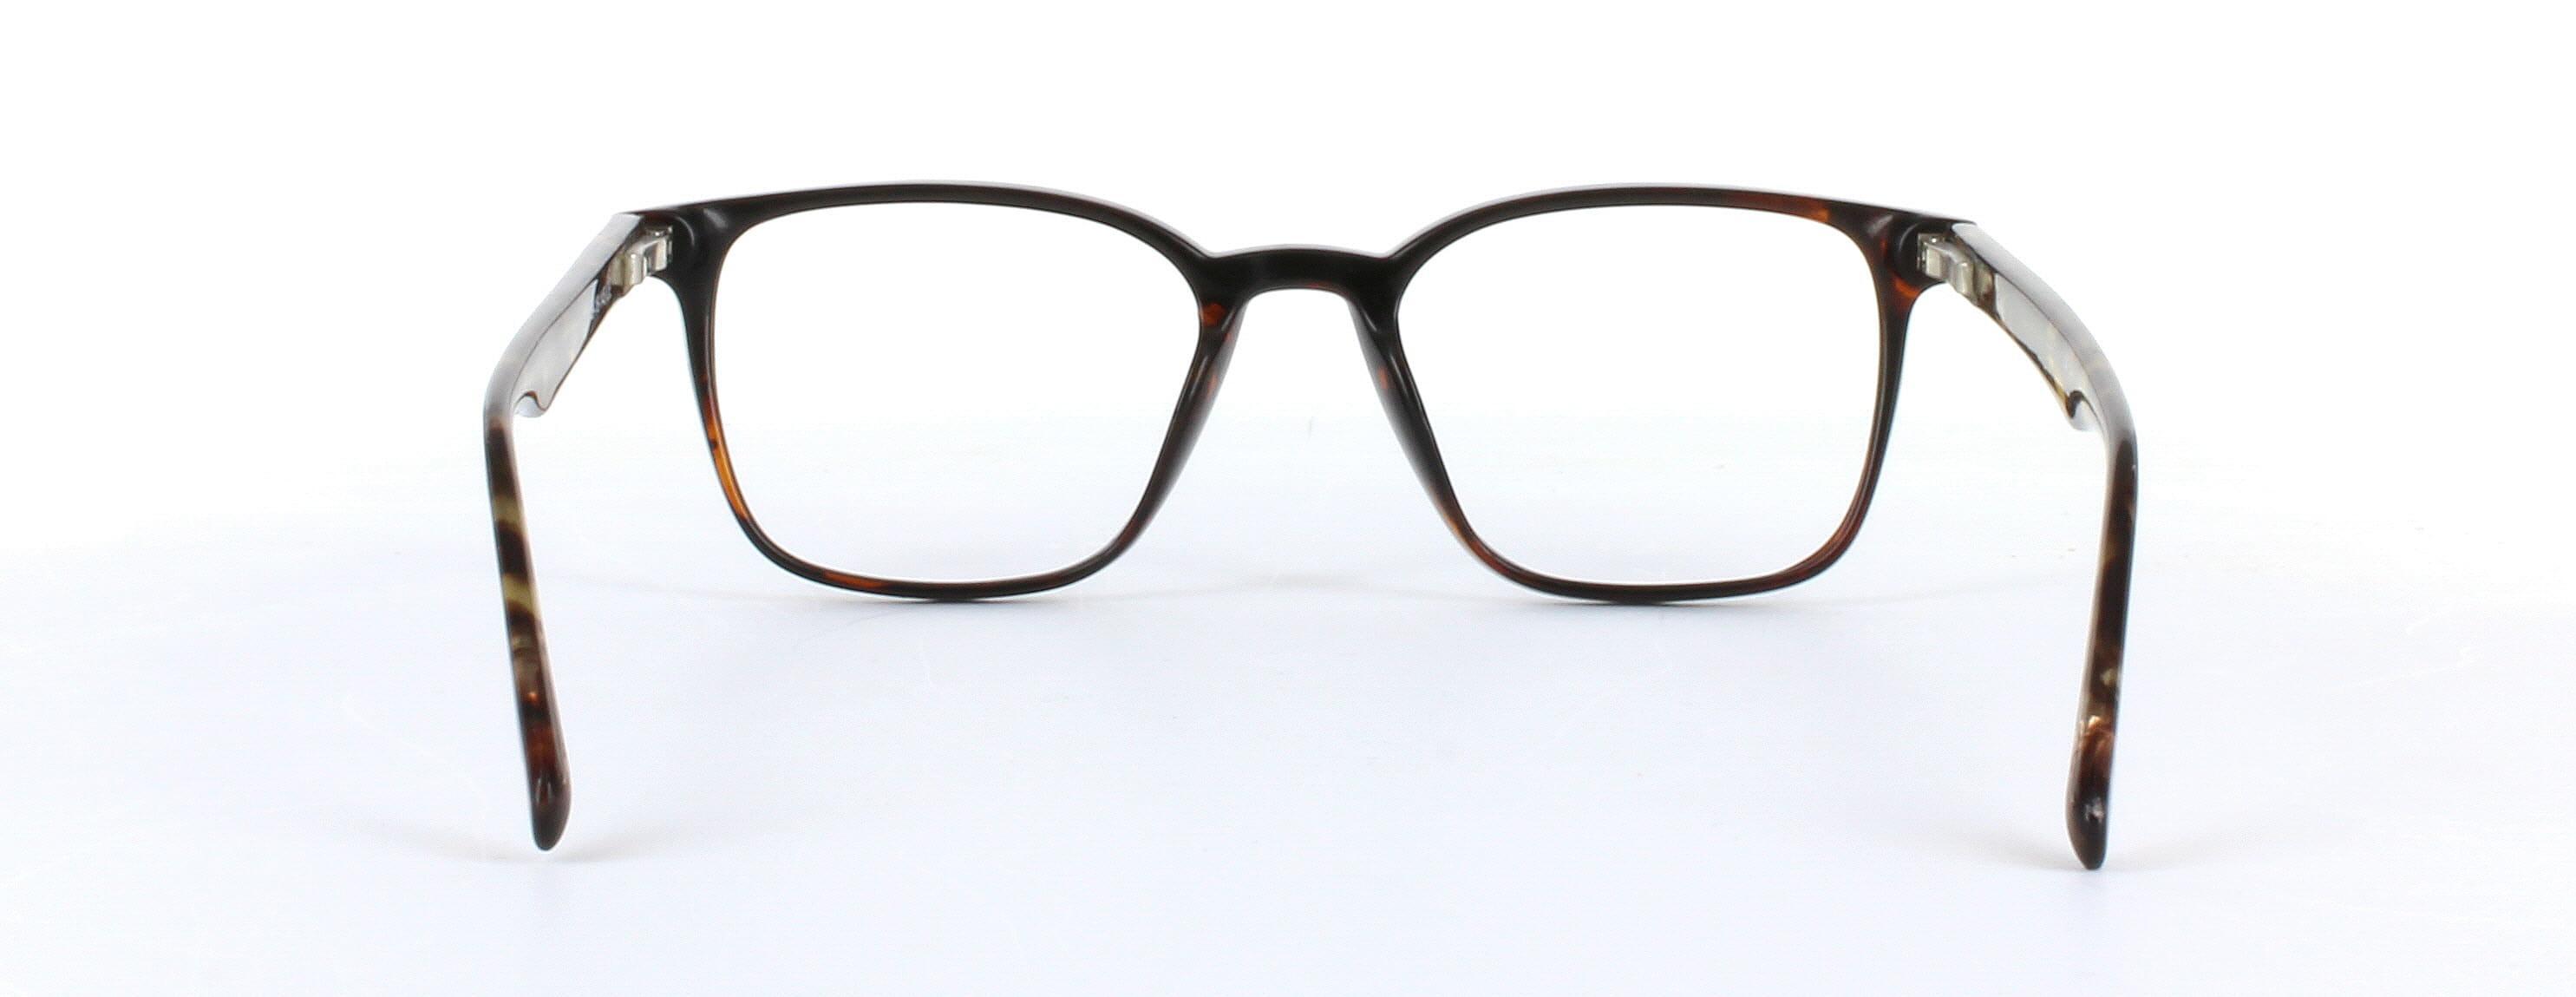 Hodson Brown Full Rim Acetate Glasses - Image View 3